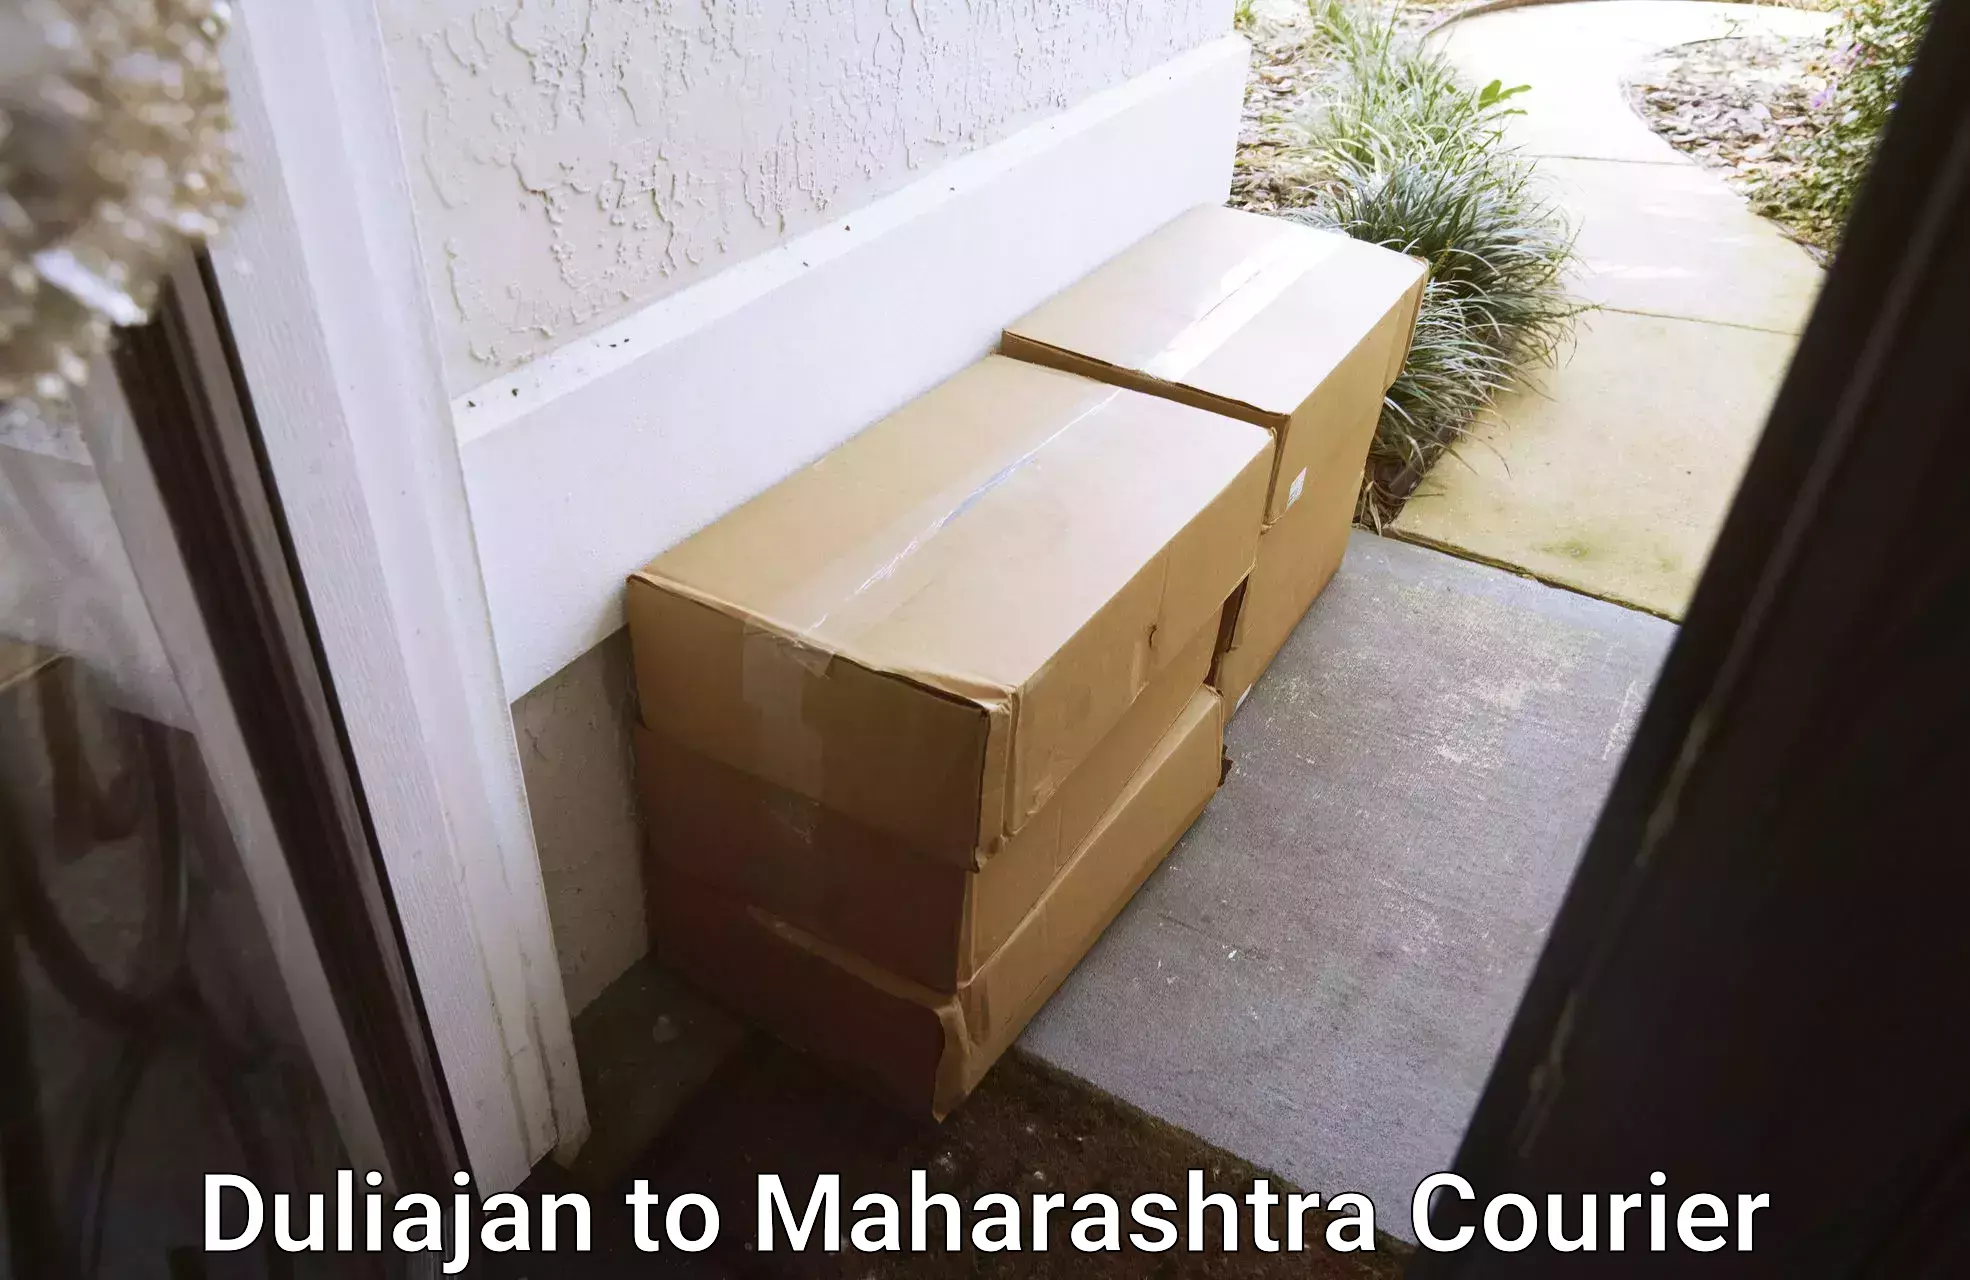 Fast delivery service Duliajan to Satara